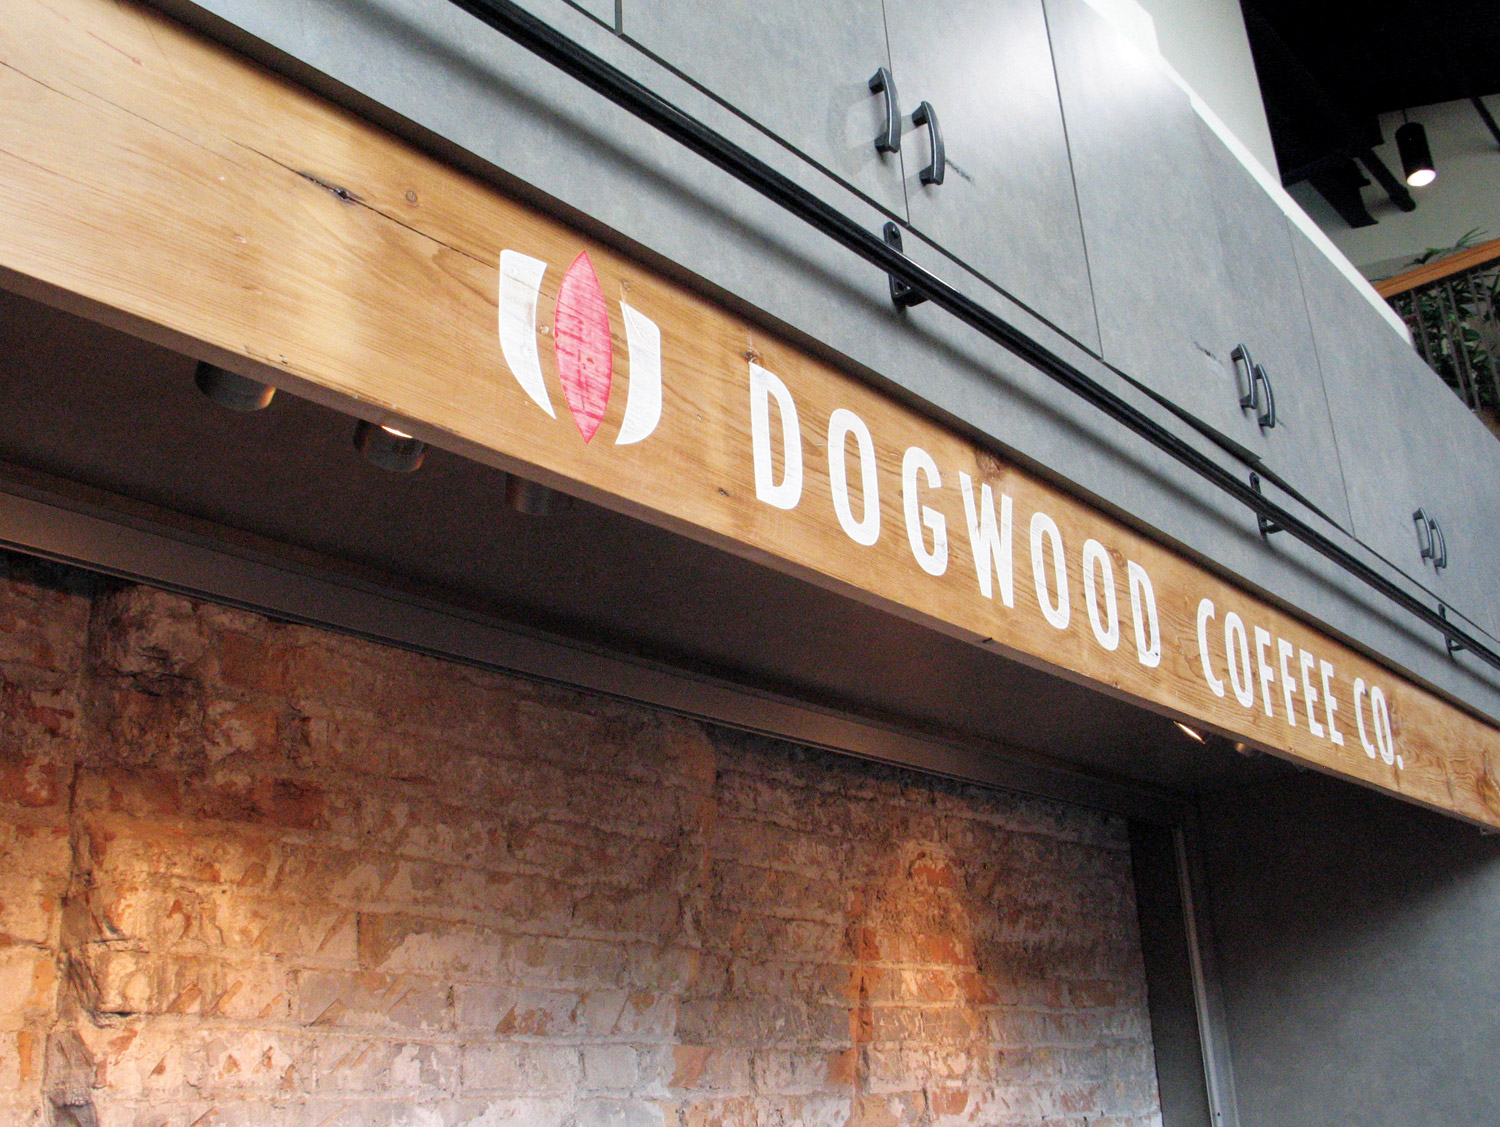 Dogwood-Coffee-Sign-09.jpg